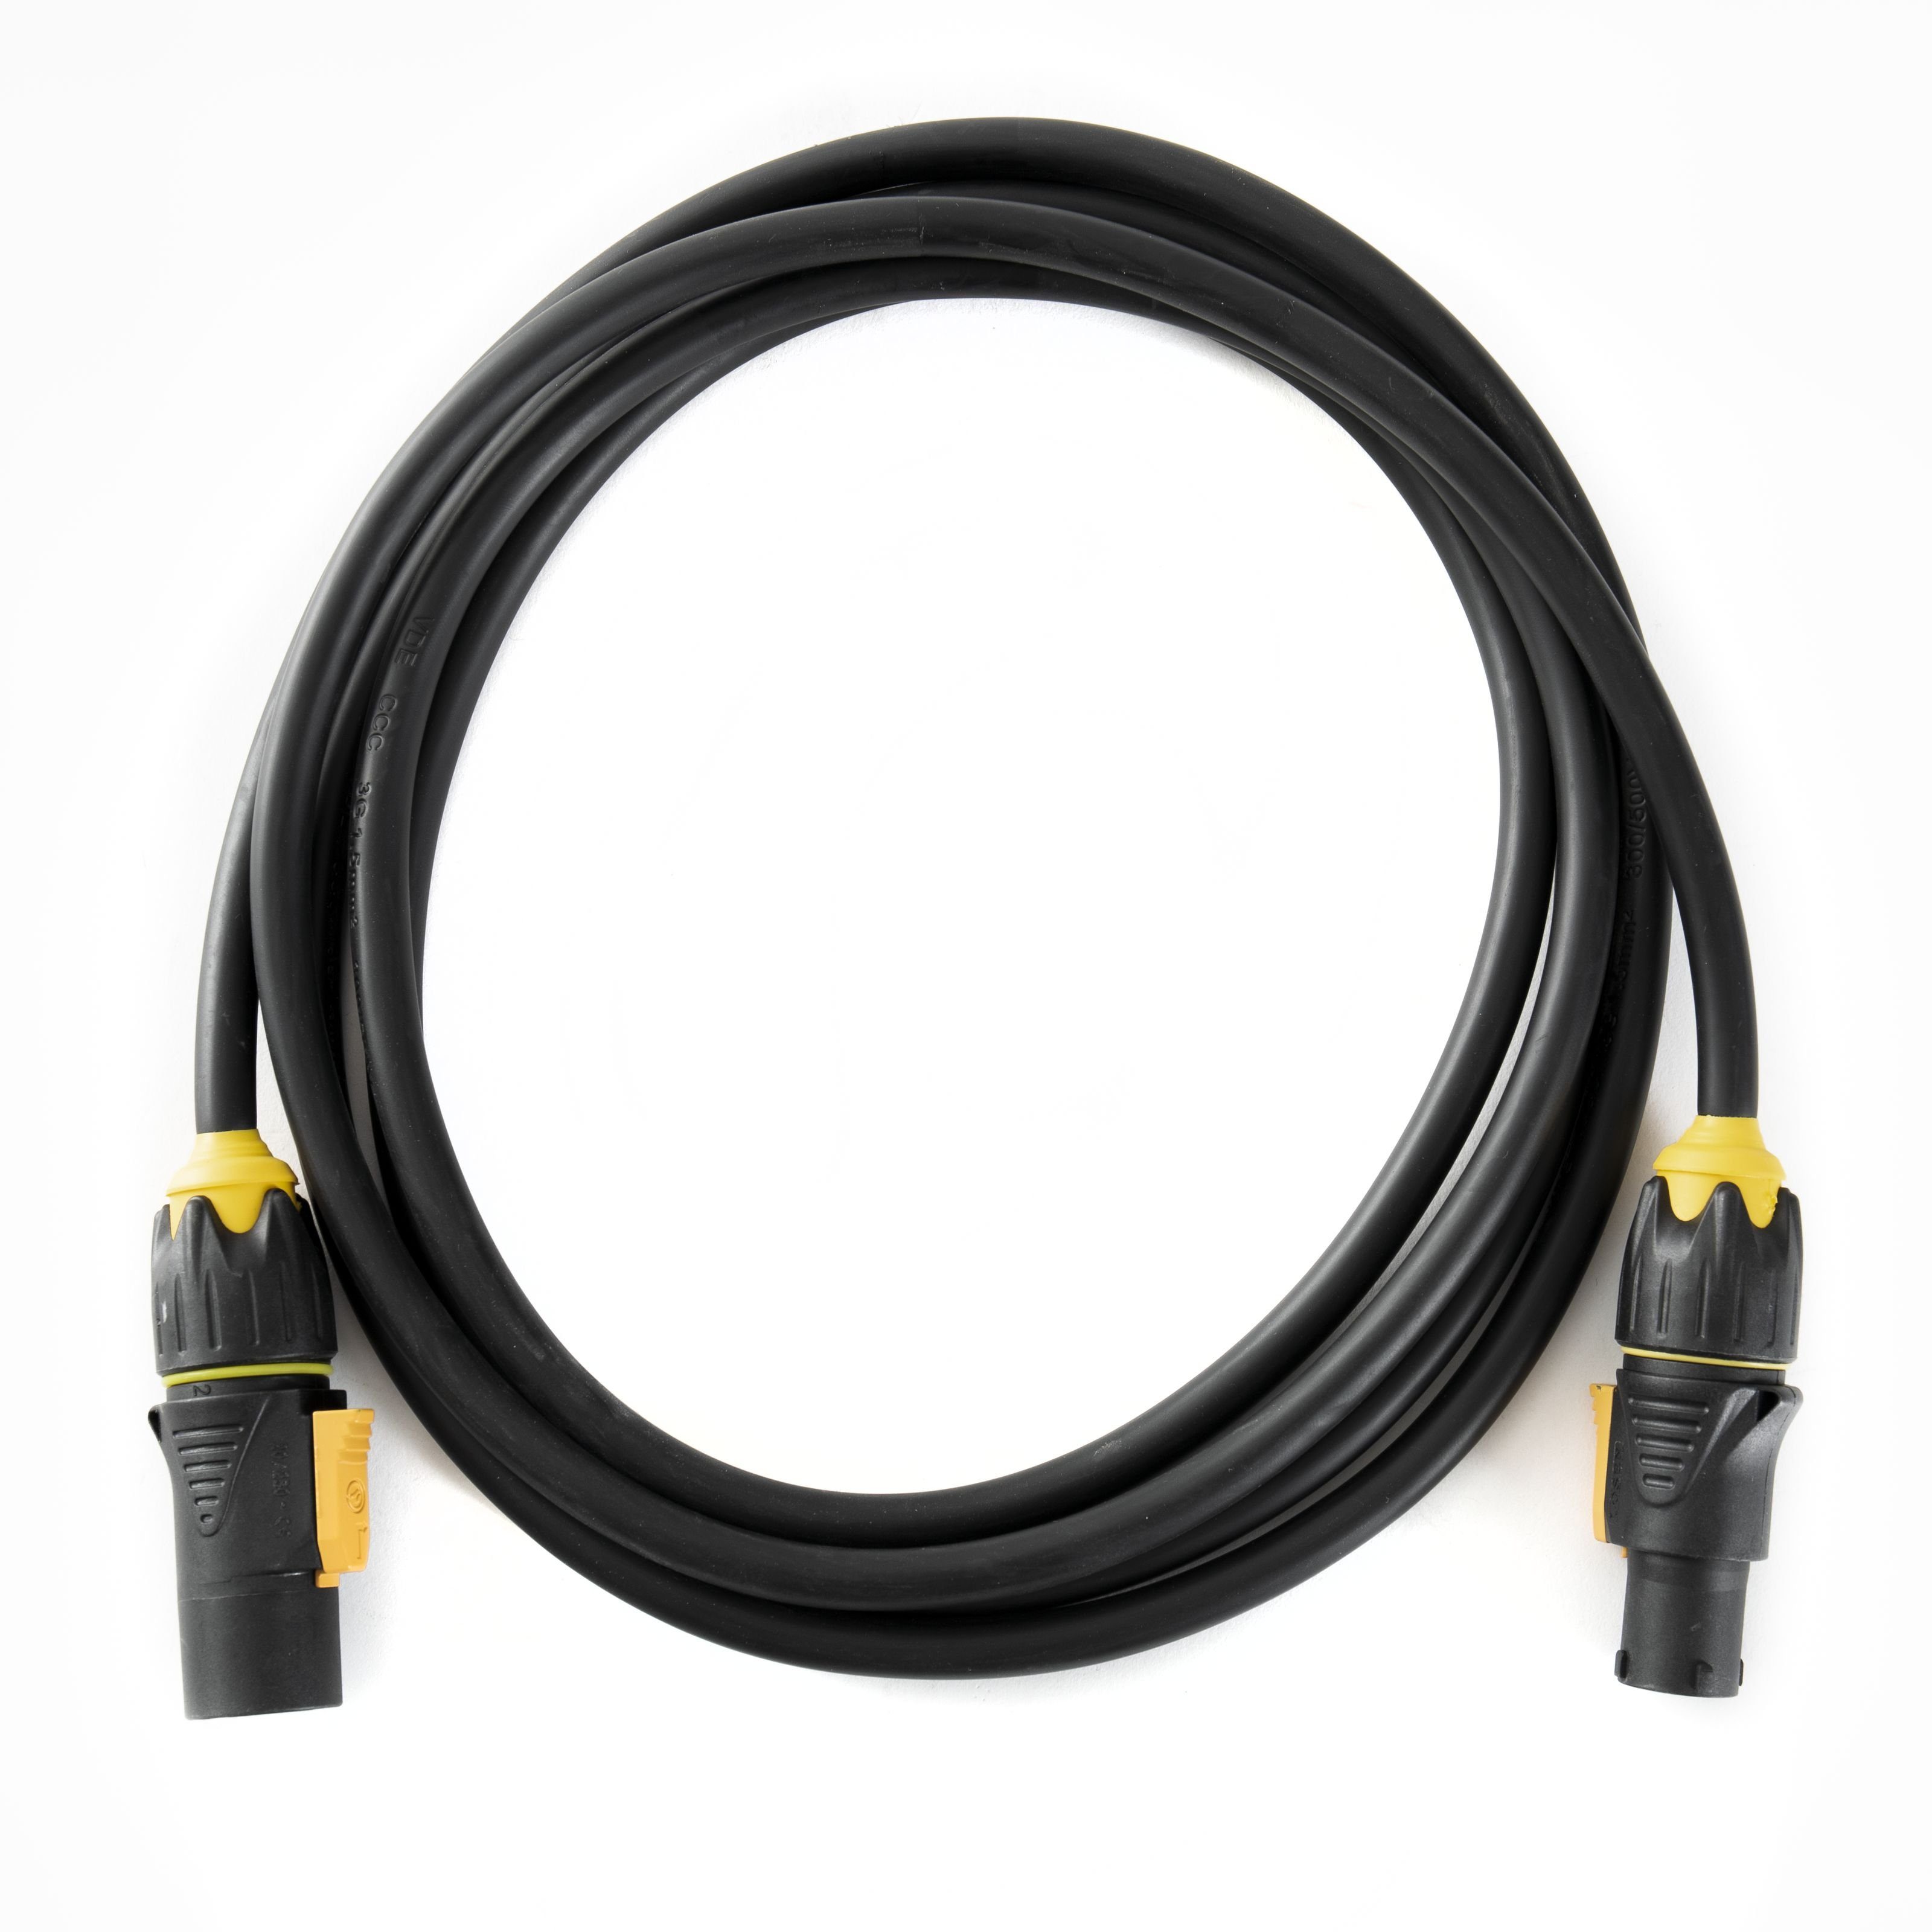 PURElight Audio-Kabel, Patchkabel, 3,0m, Hochwertiges Patchkabel, 3 x 2,5mm², Optimale